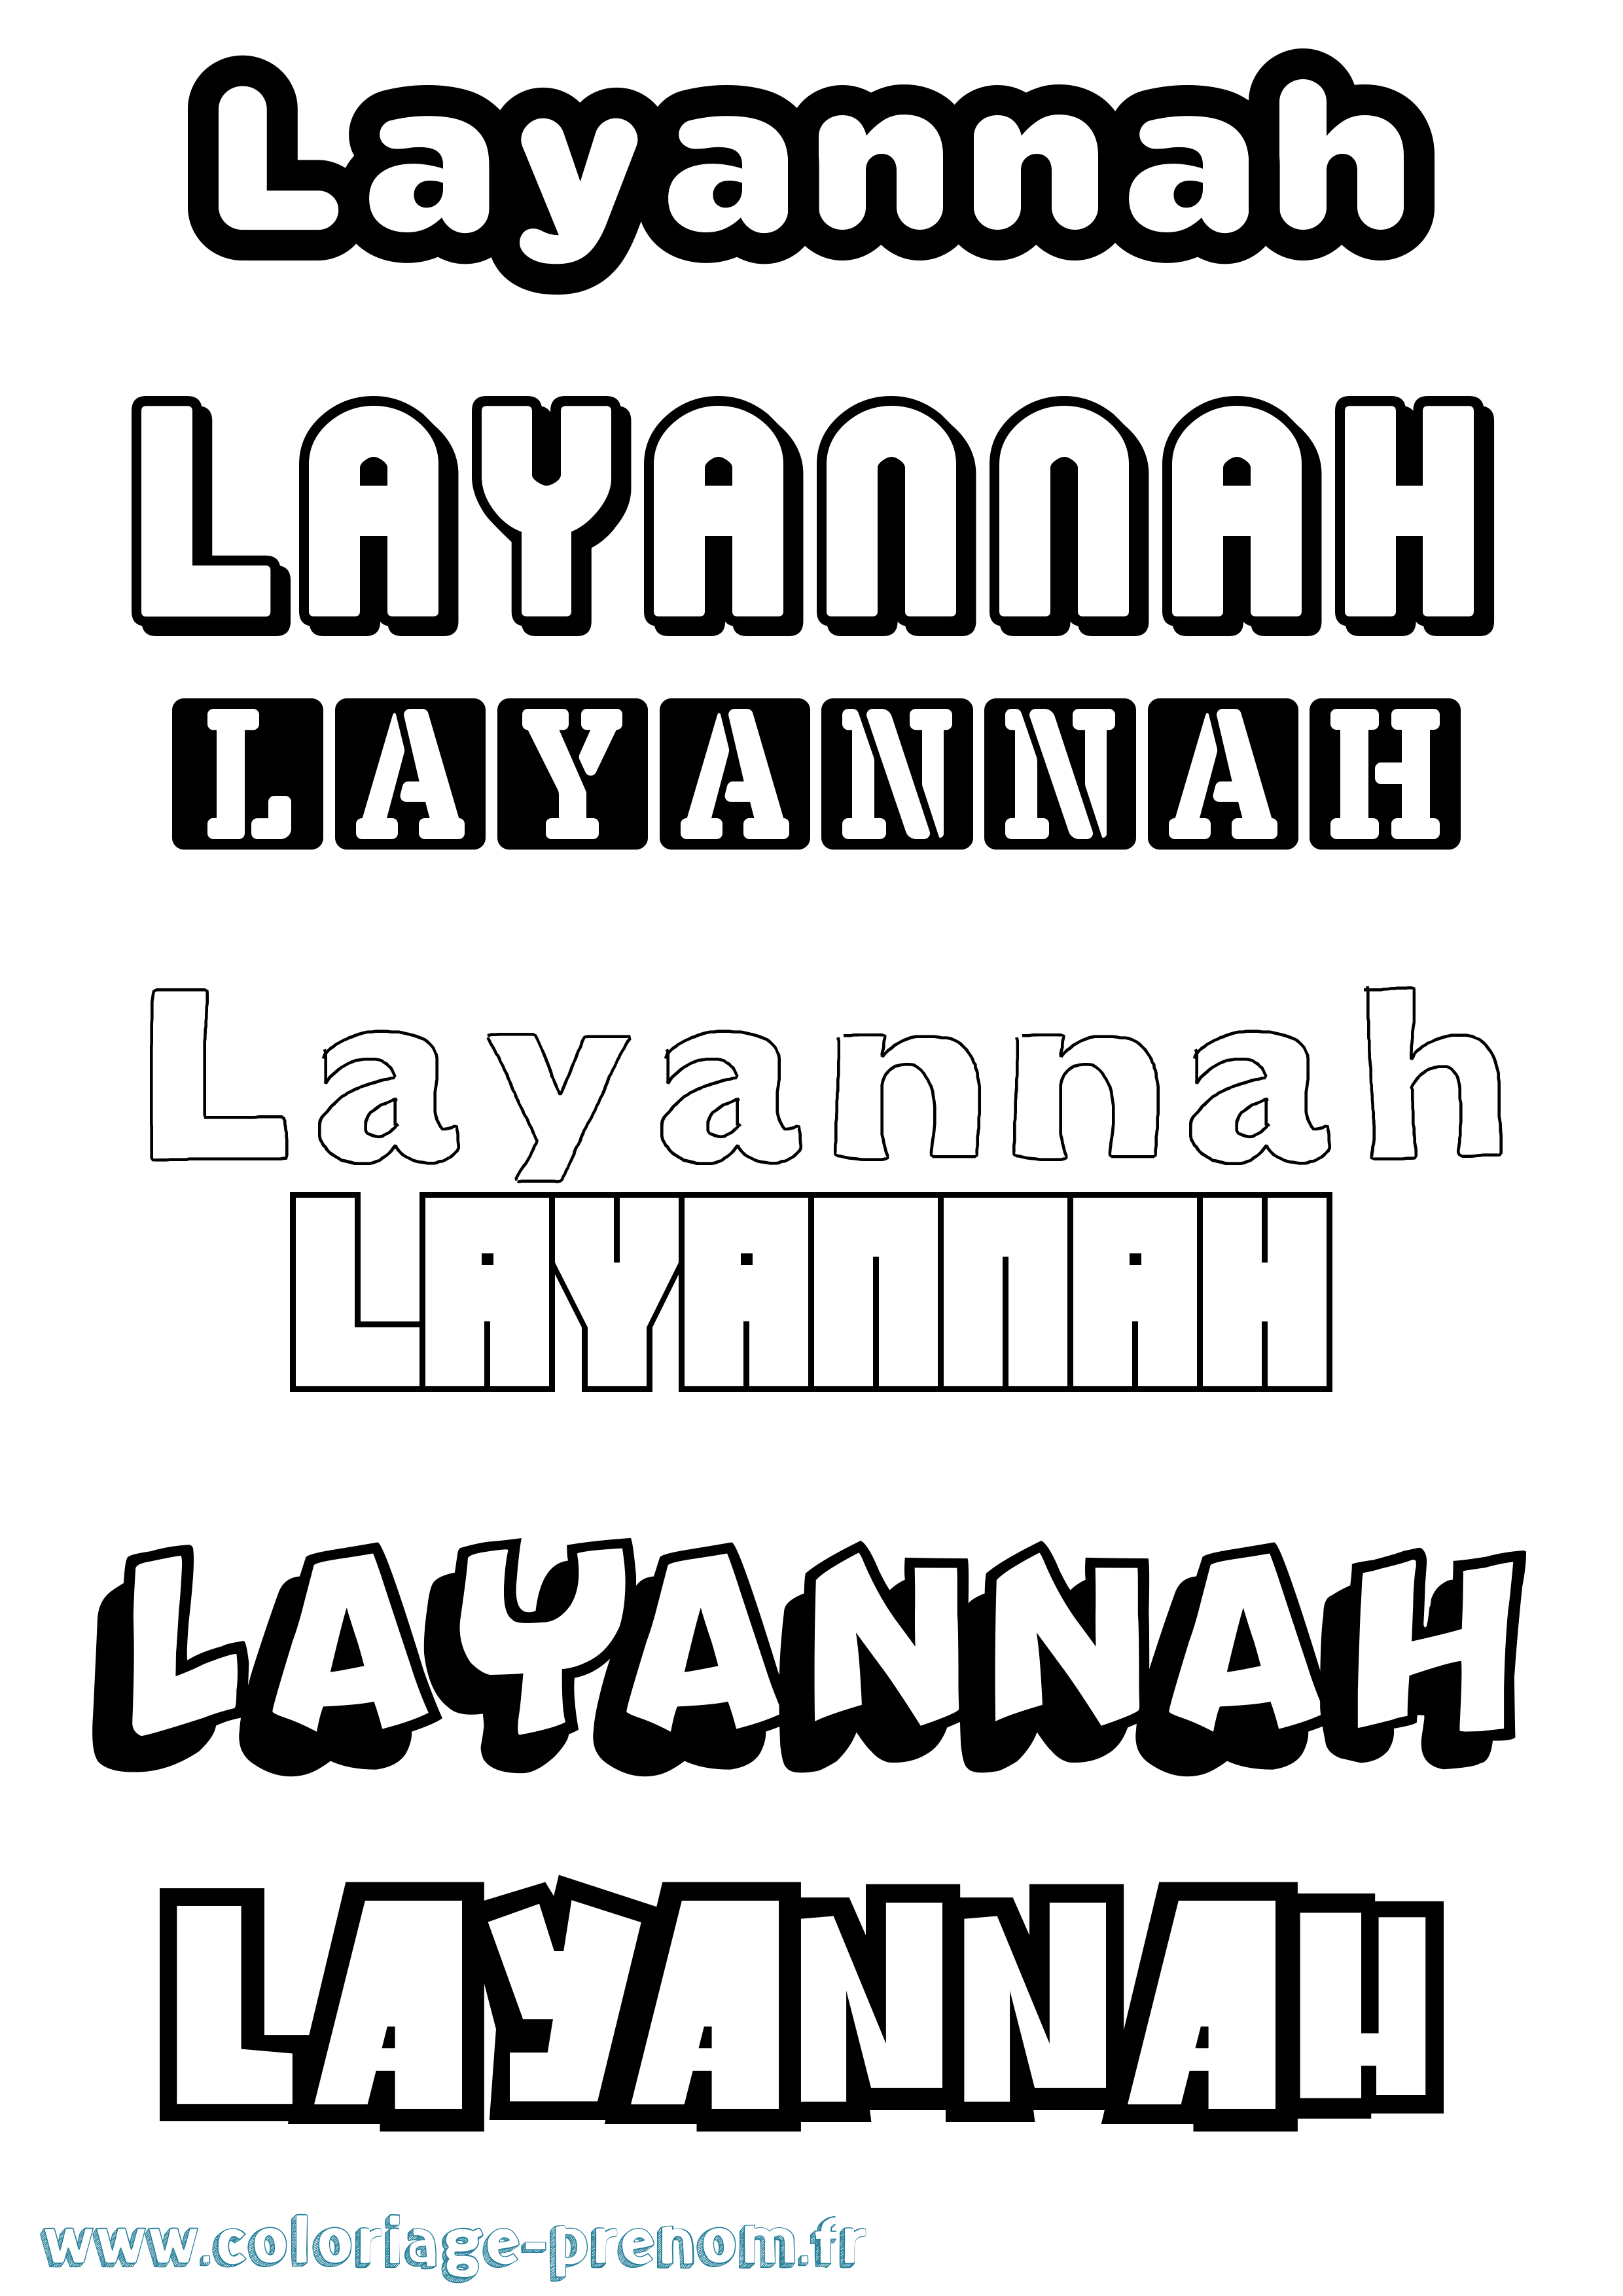 Coloriage prénom Layannah Simple